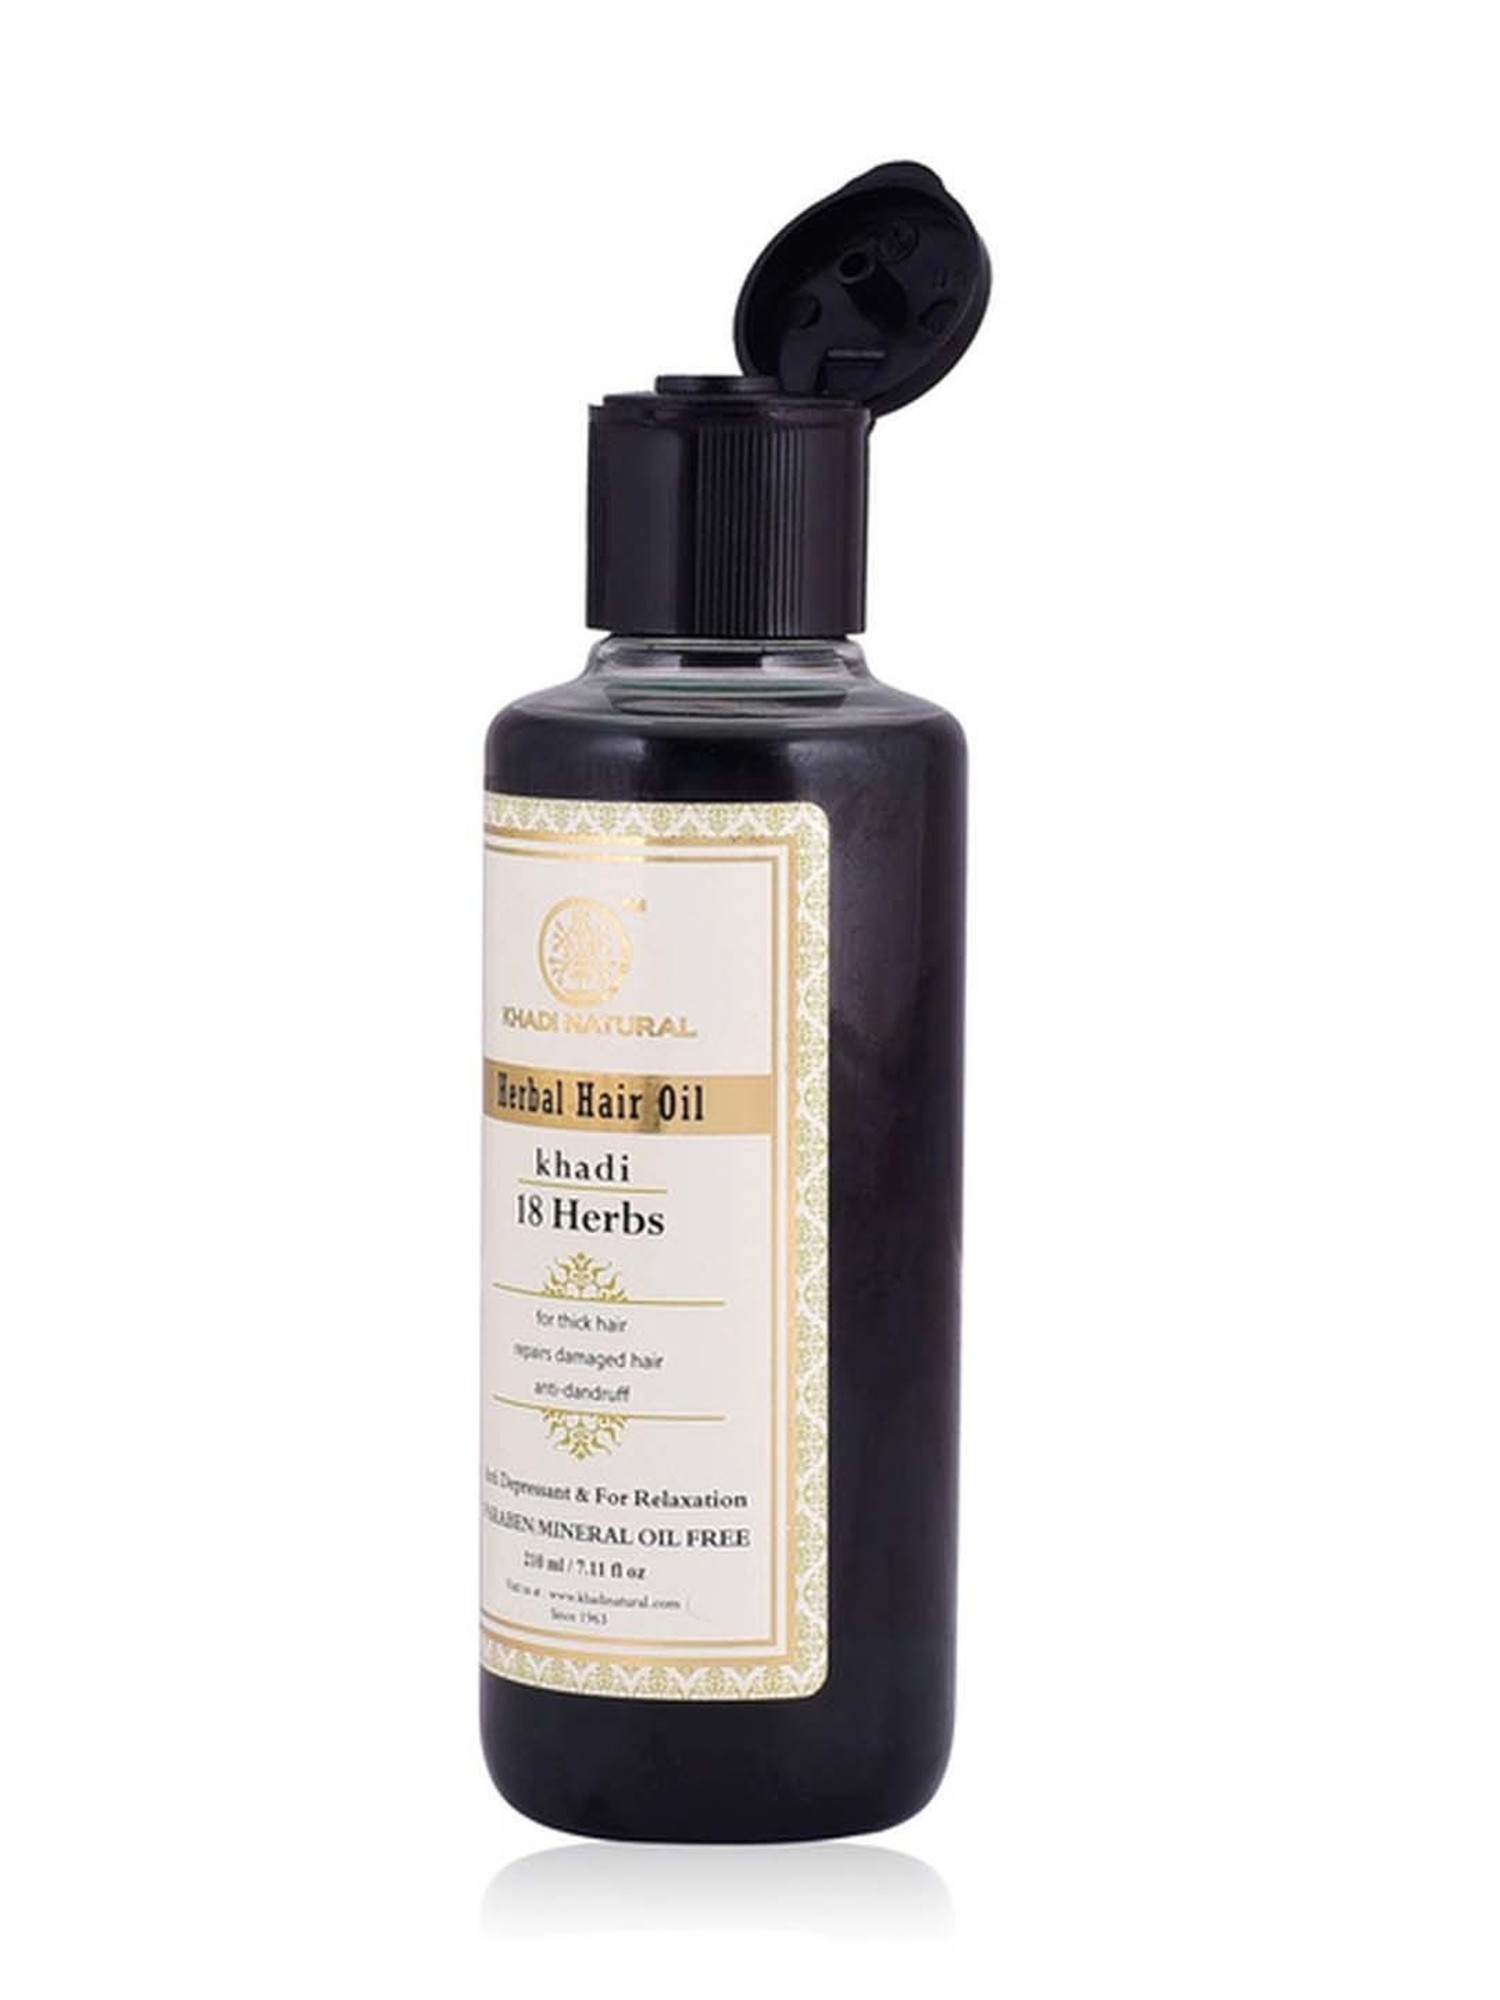 Buy Khadi Herbal 18 Herbs Hair Oil - 210 ml Online At Best Price @ Tata CLiQ